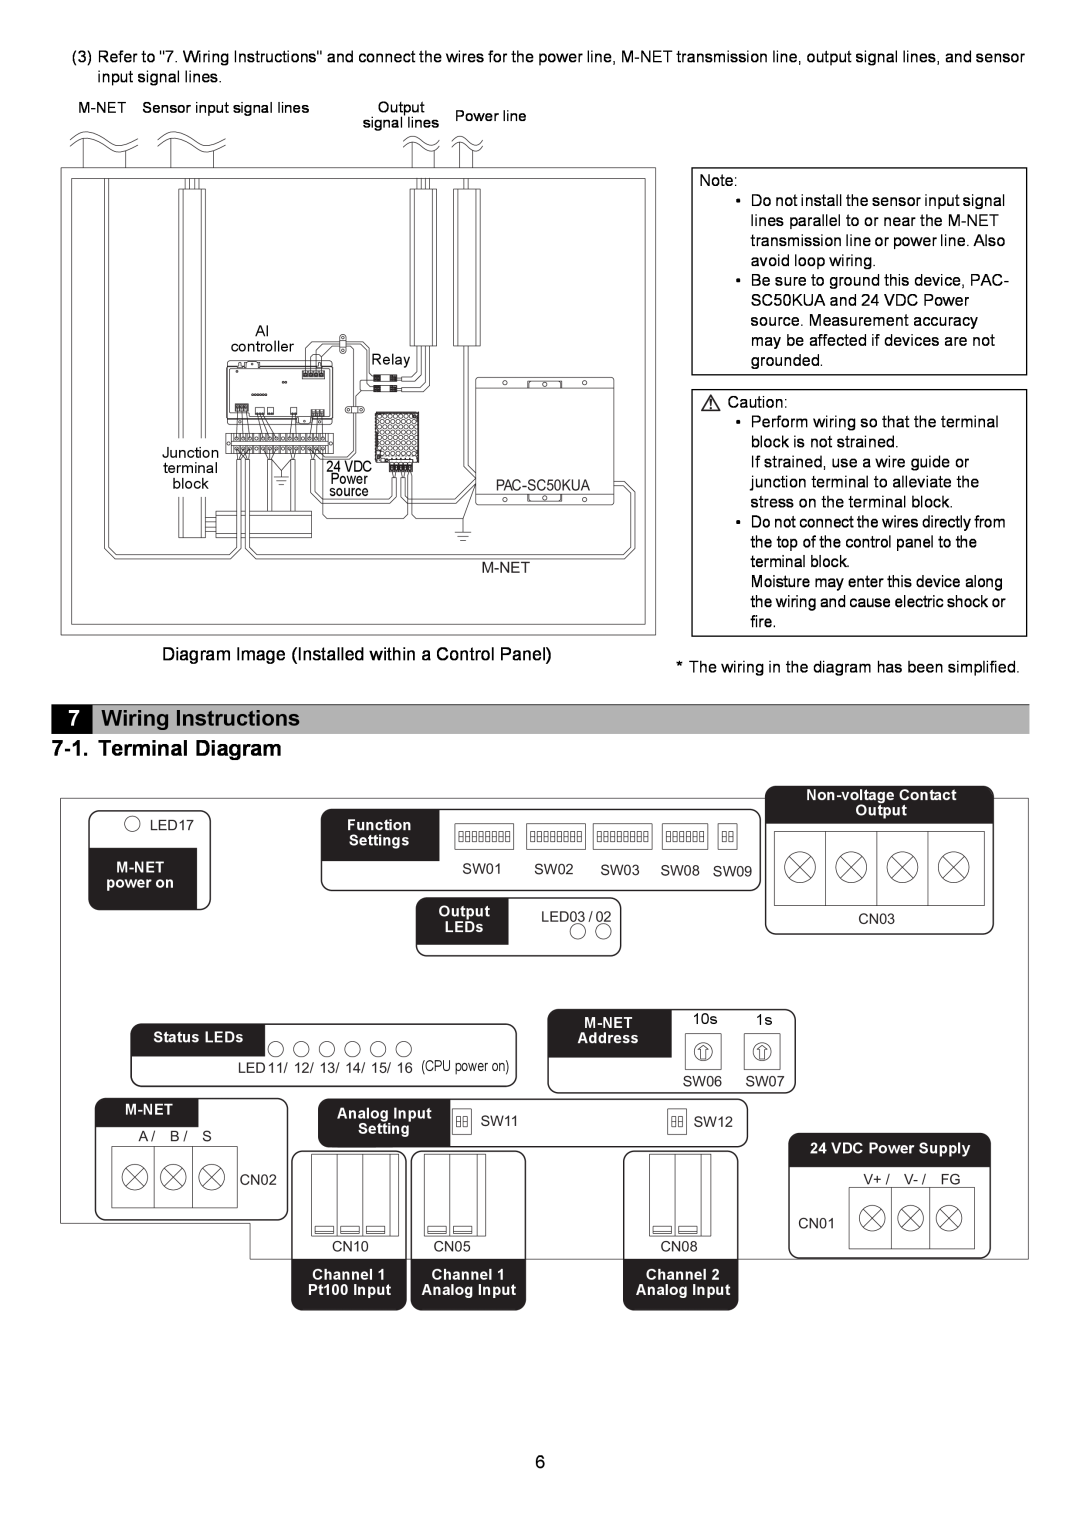 Mitsubishi Electronics PAC-YG63MCA instruction manual Wiring Instructions 7-1. Terminal Diagram 